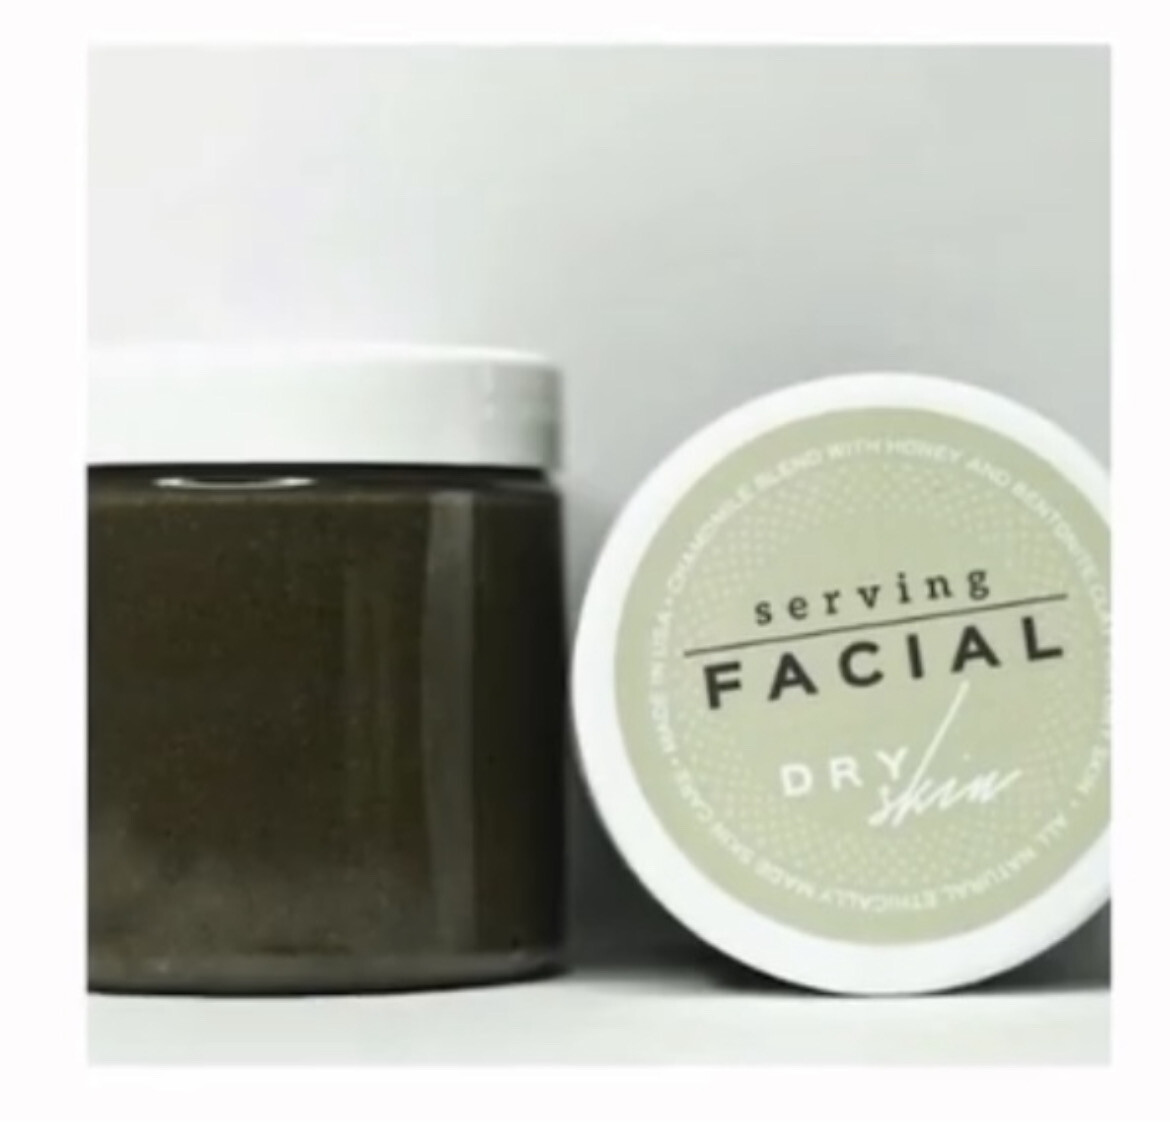 Serving Facial 4oz Dry Blend